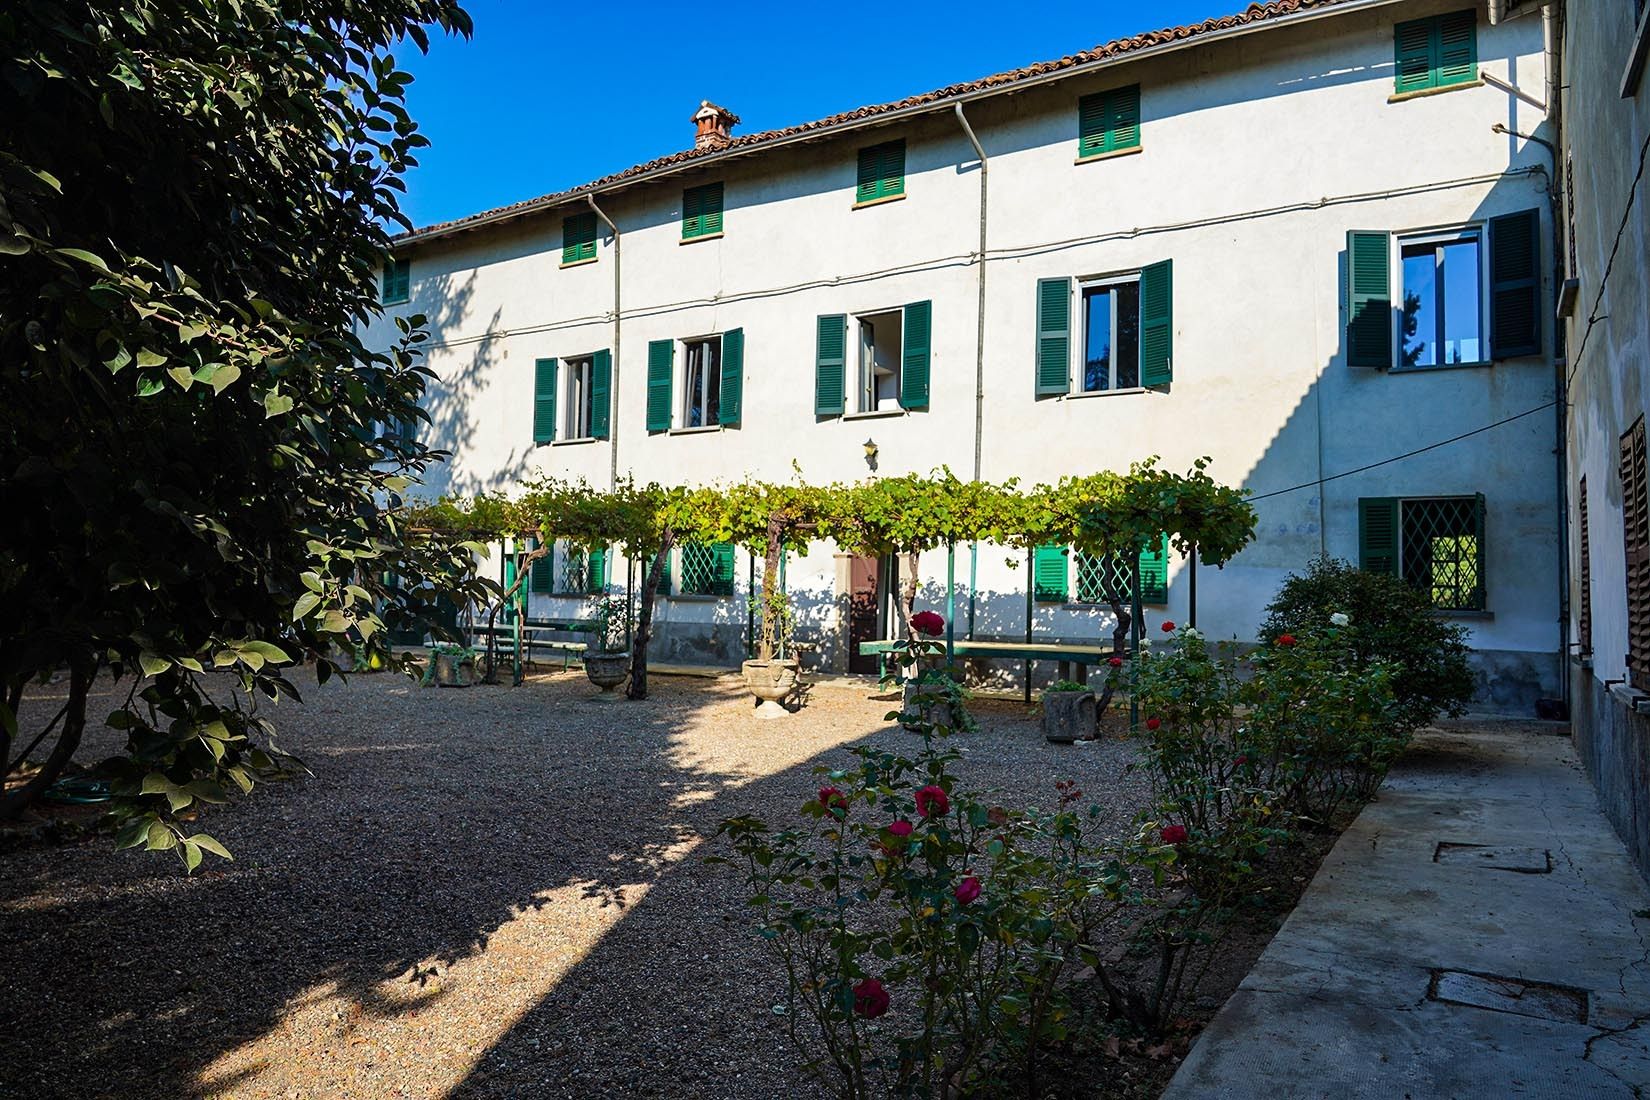 Vendita Casale Antico in Piemonte | luxforsale.it